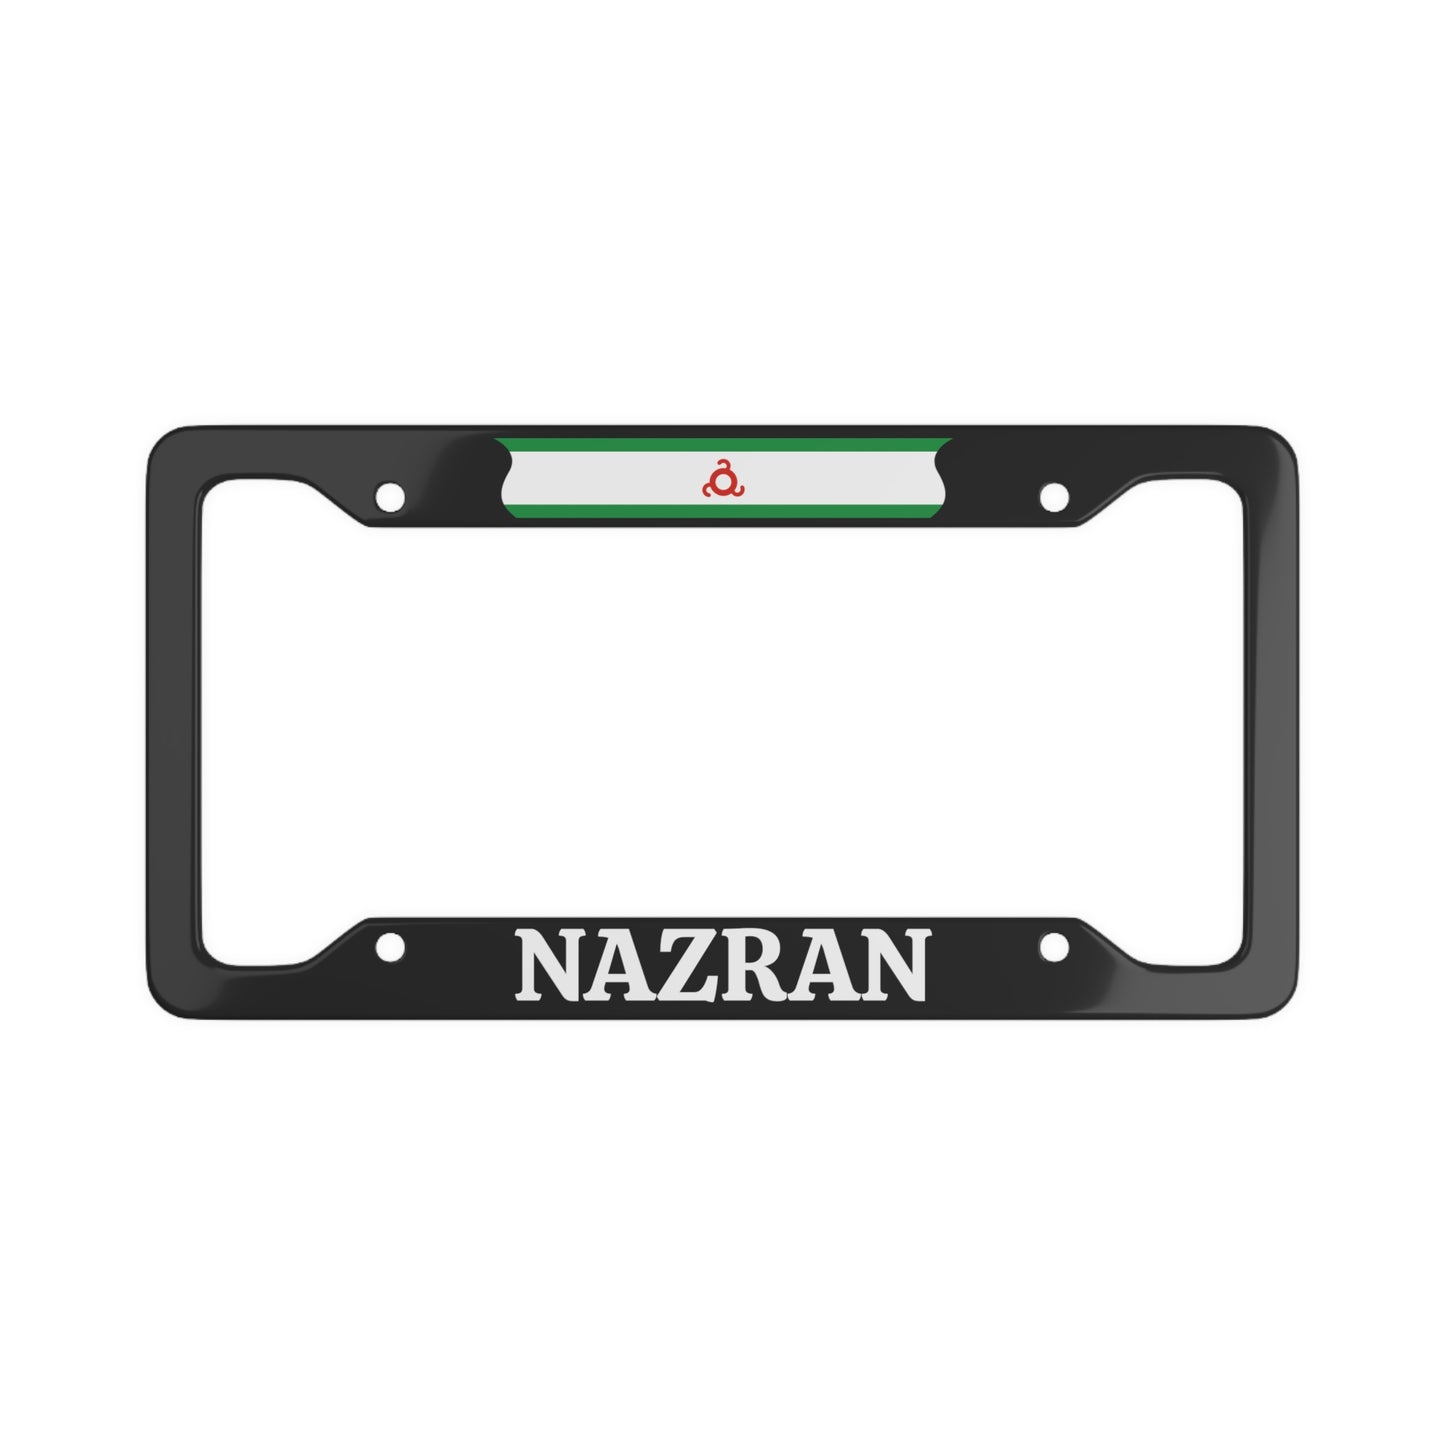 Nazran License Plate Frame